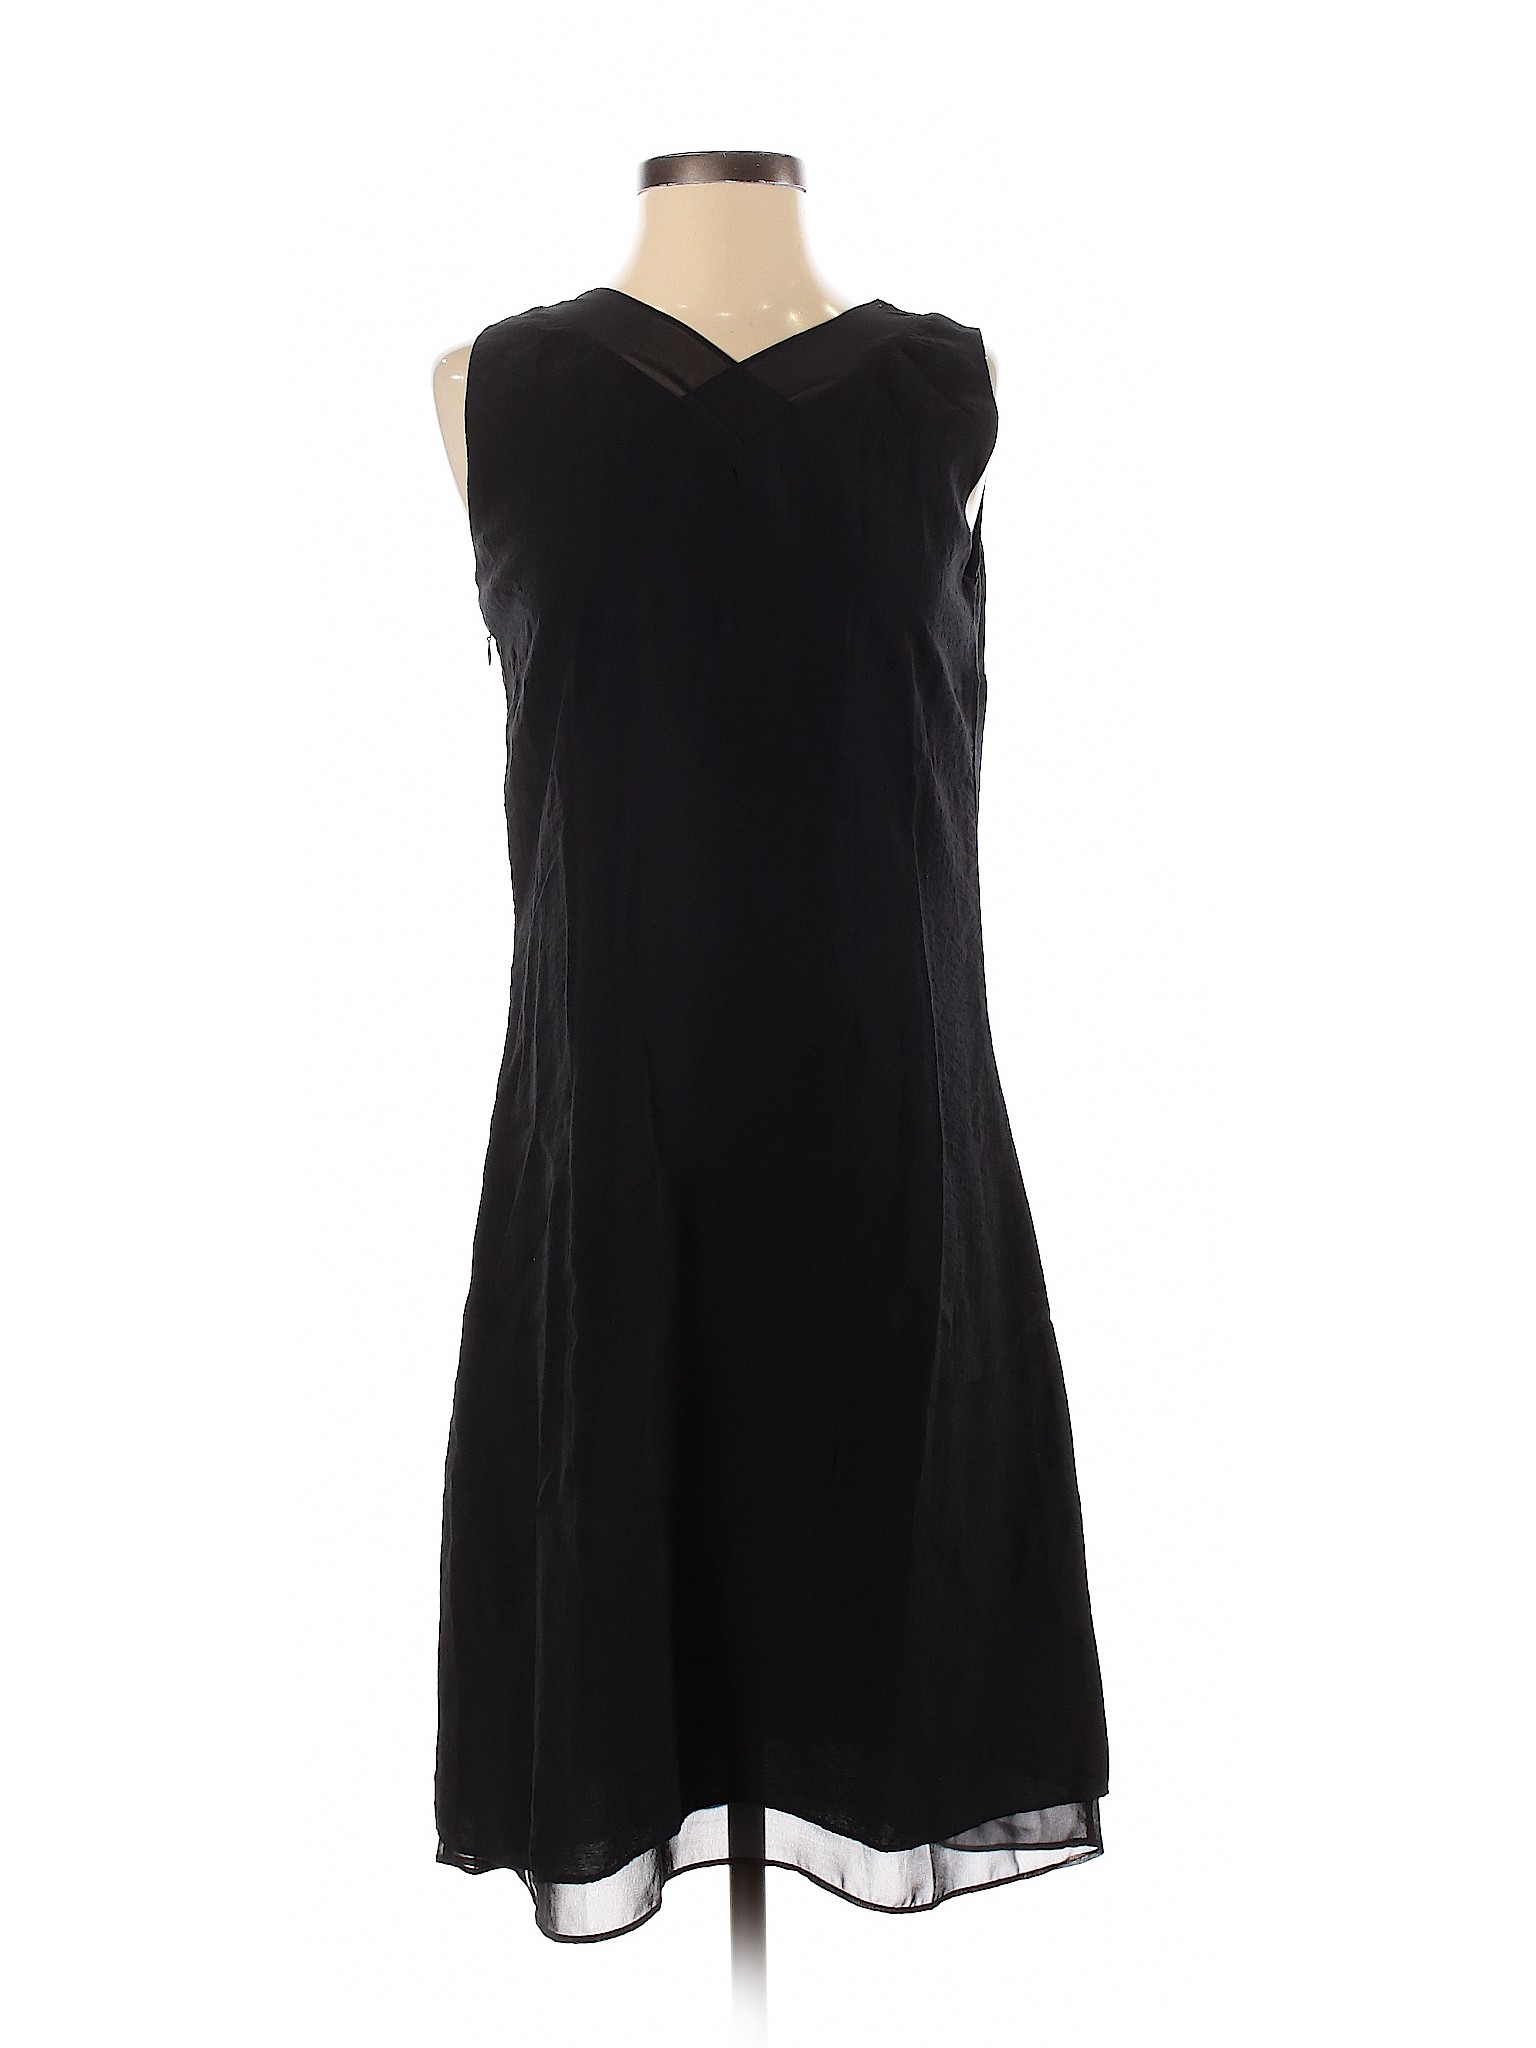 Coldwater Creek Women Black Casual Dress XS | eBay